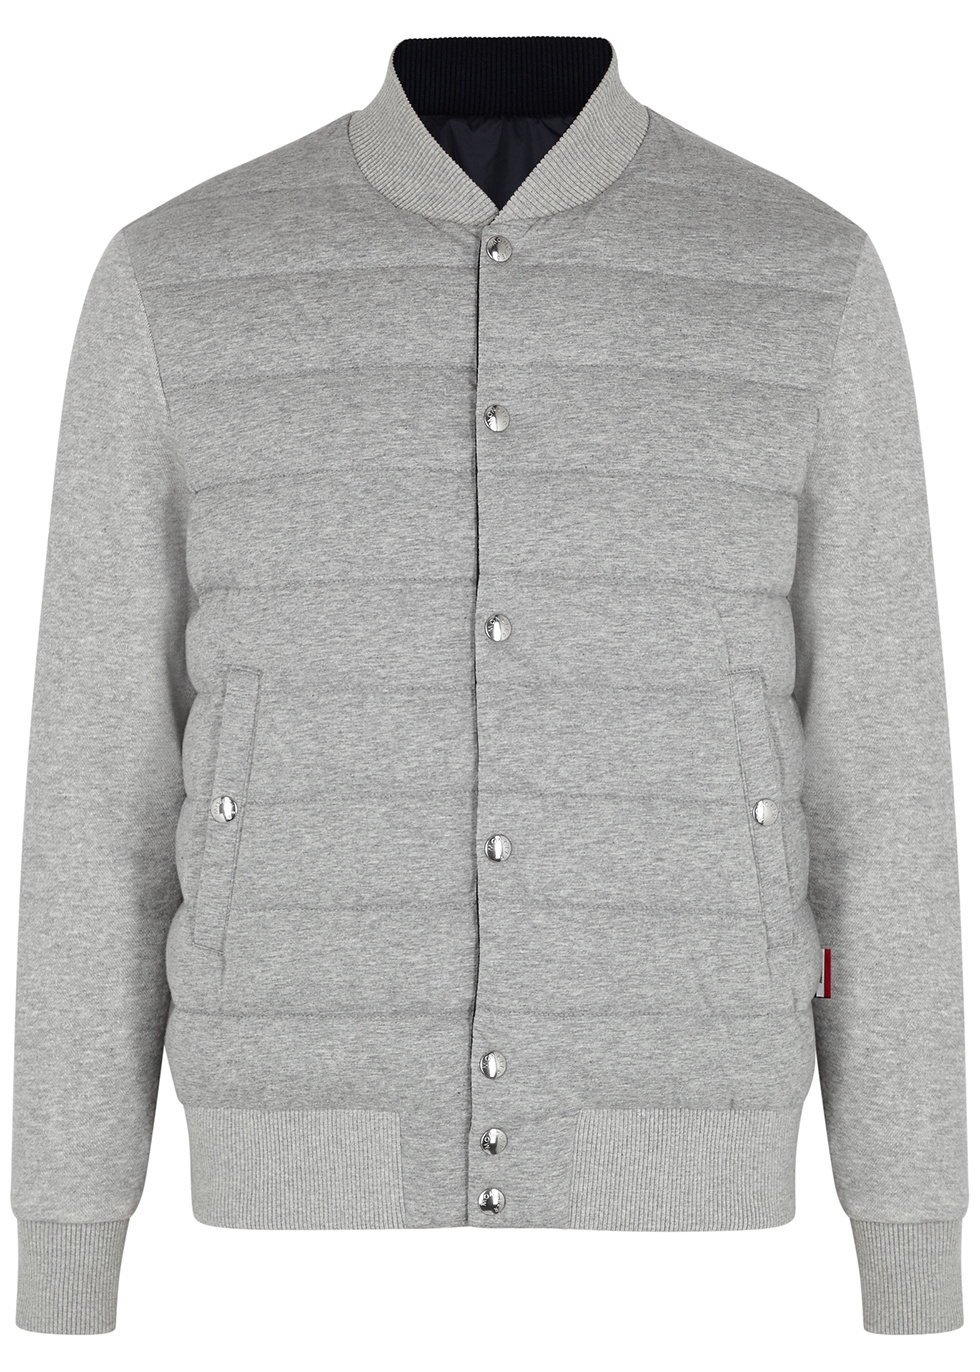 moncler grey jacket